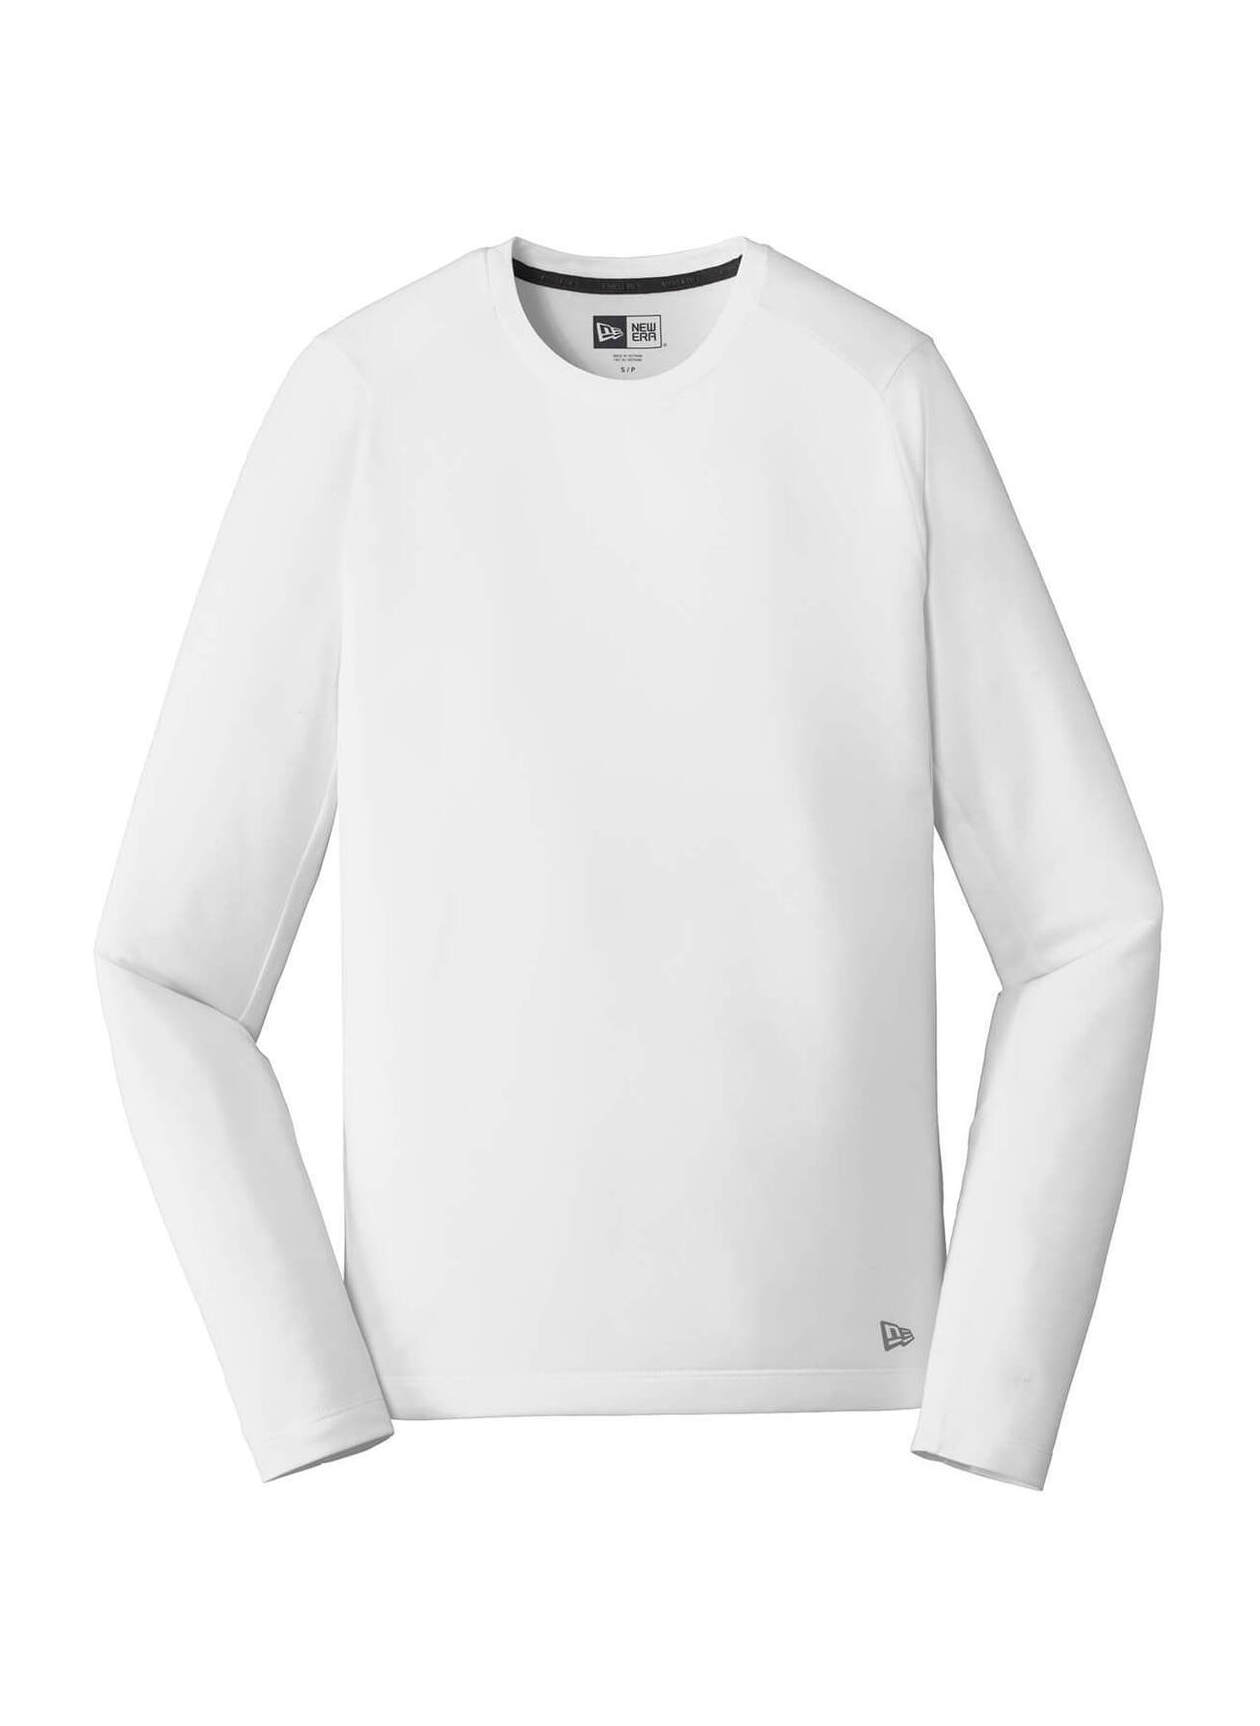 New Era Men's White Series Performance Crew Long-Sleeve T-Shirt